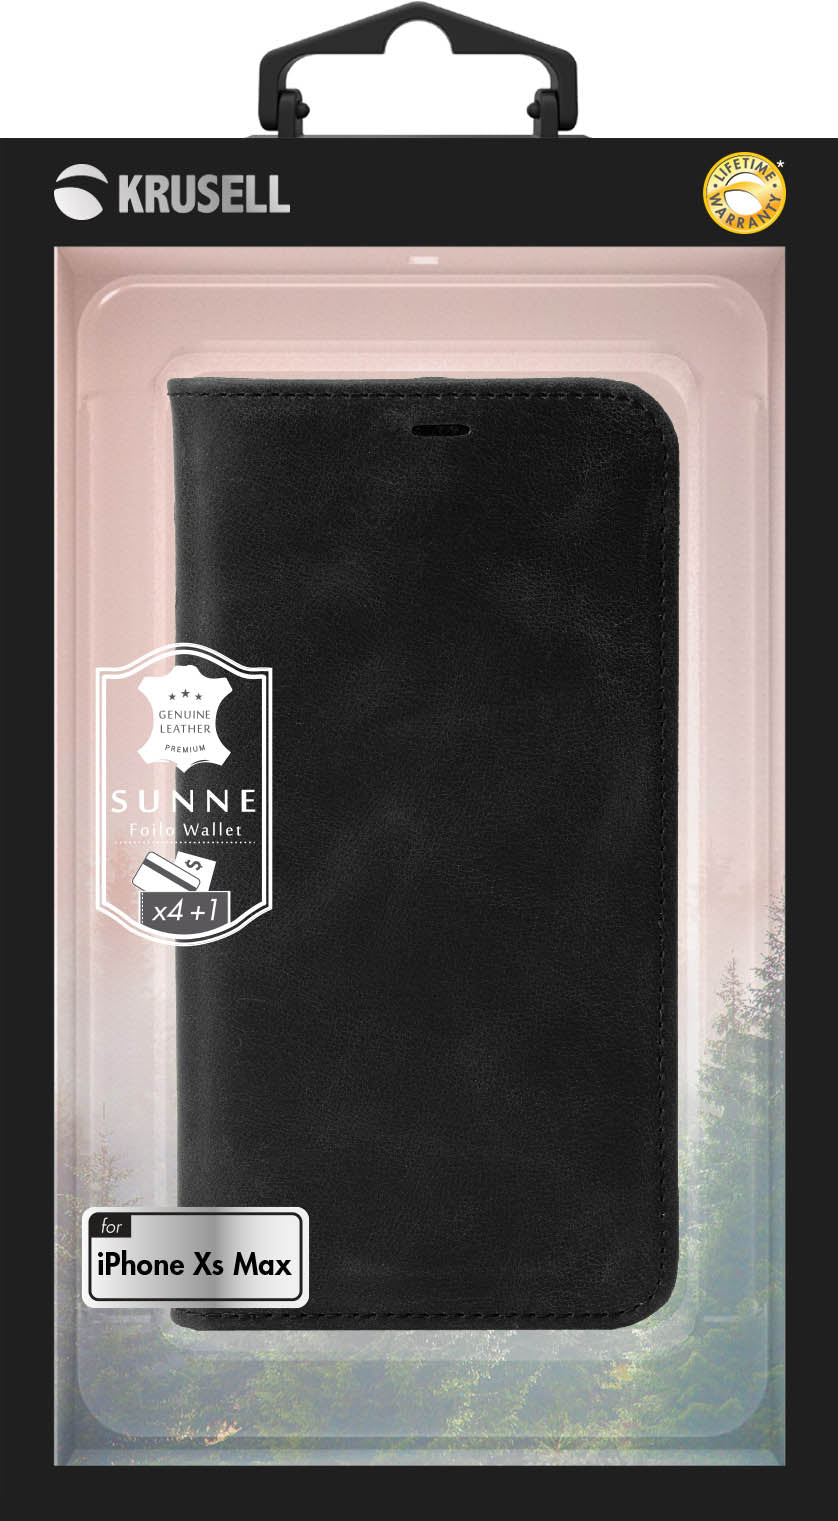 Krusell Sunne 4 Card FolioWallet Apple iPhone XS Max винтажный черный 